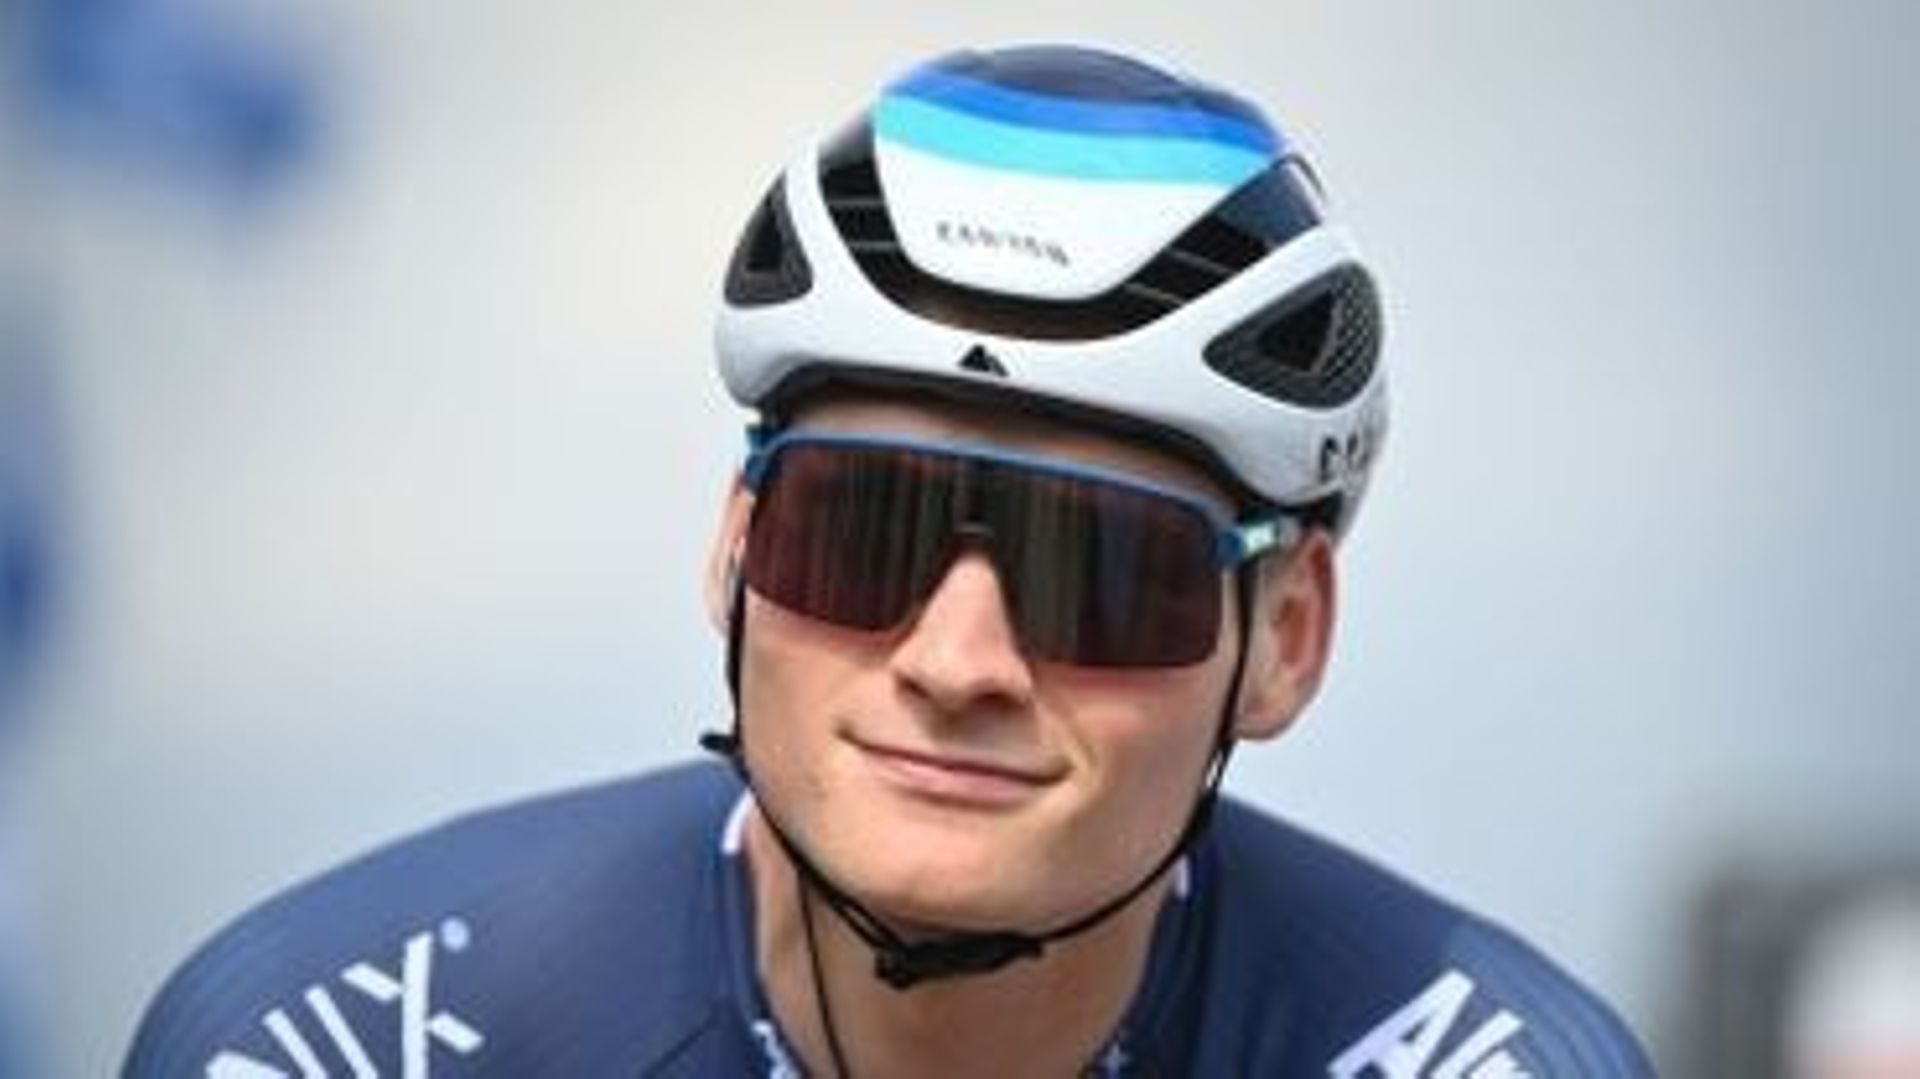 Cyclisme : Mathieu Van der Poel